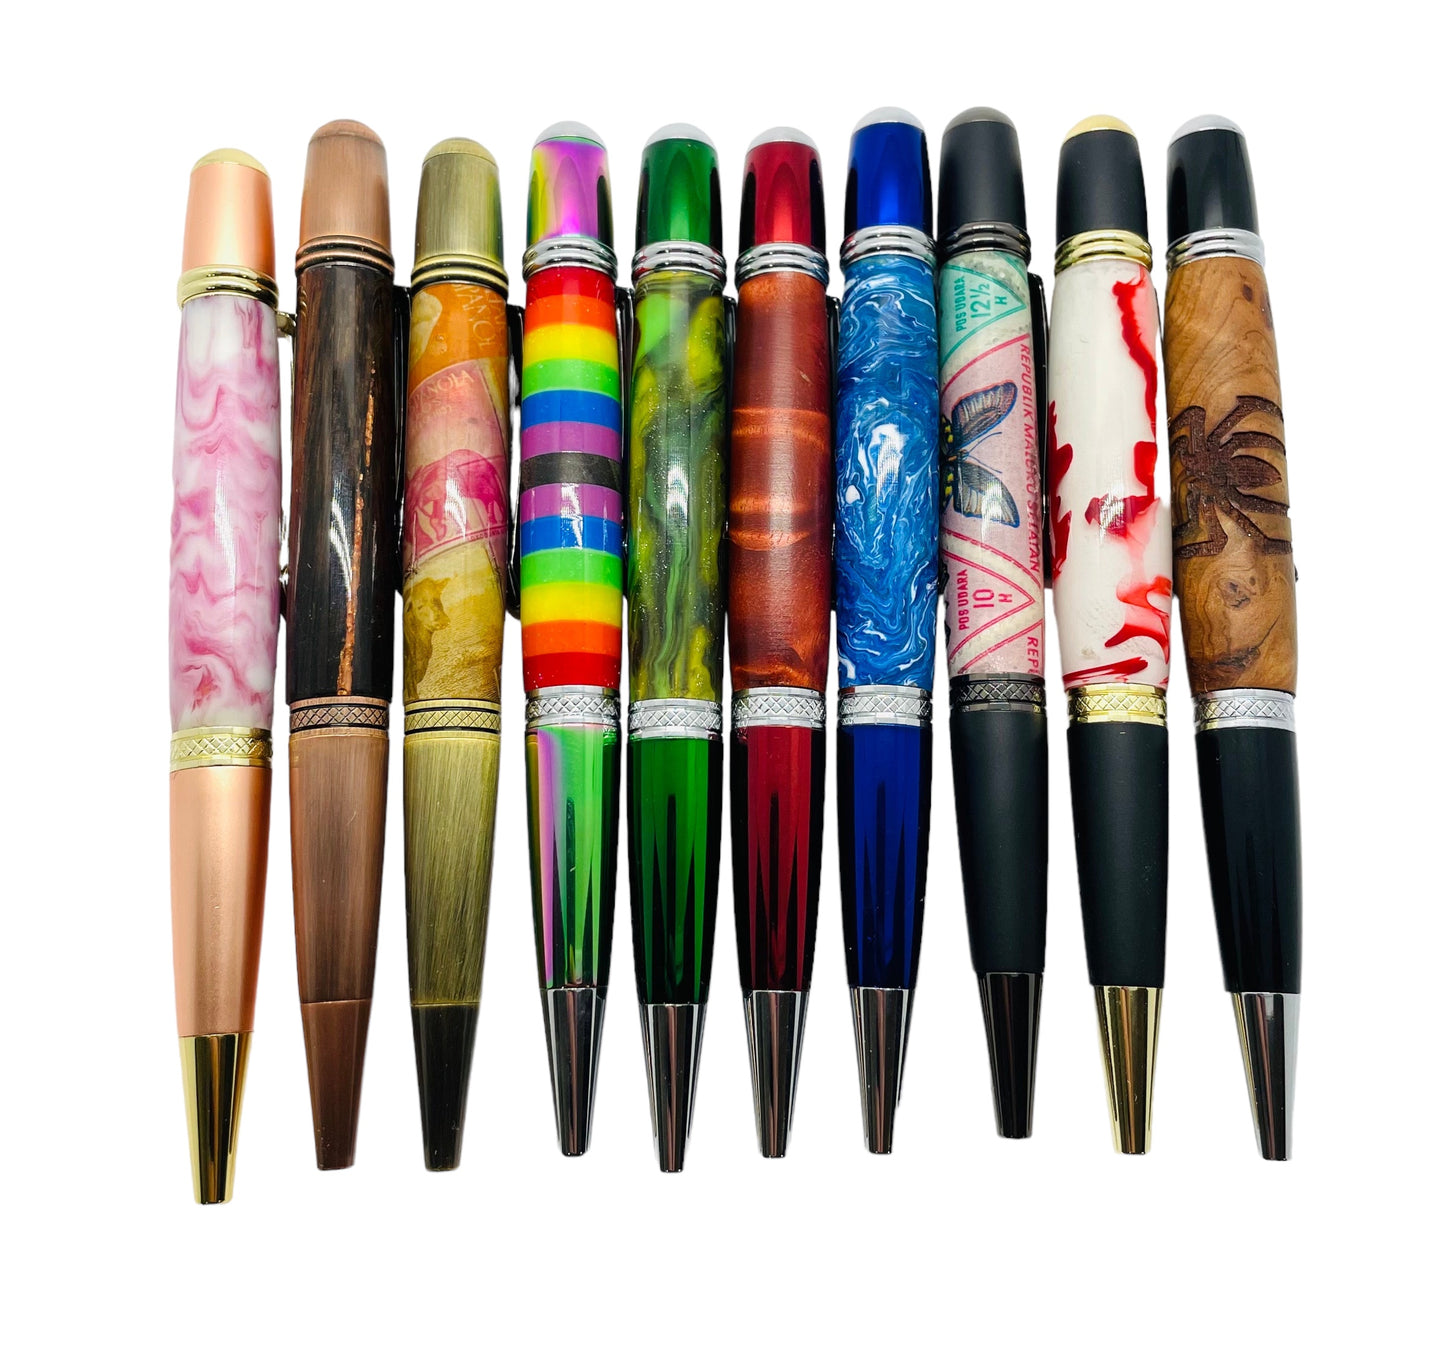 Monarch pen kit: Gold & Satin Copper